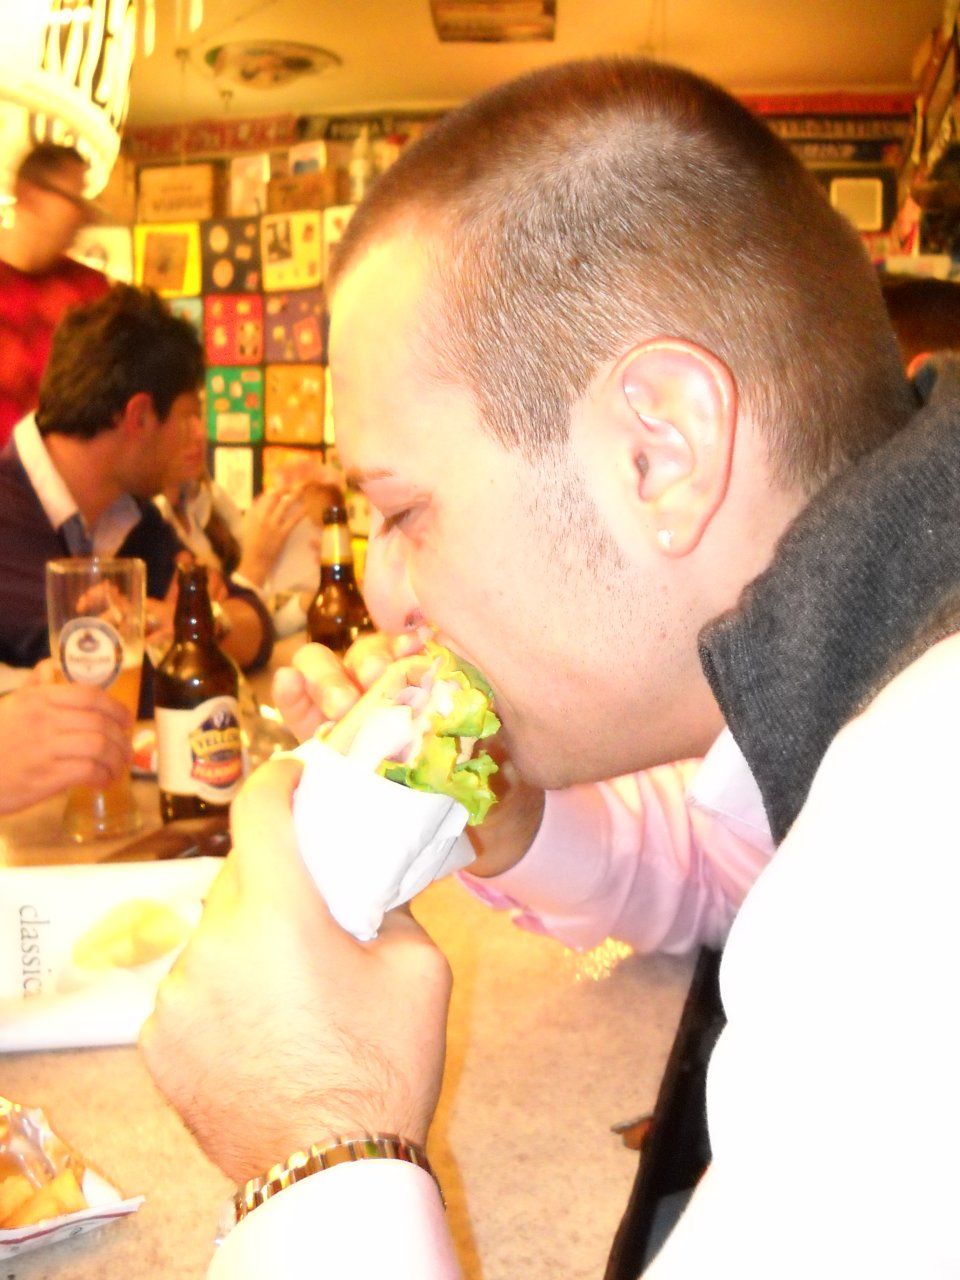 Paninata a Parma @ Chelsea Pub - 24/10/2009 - Chris che stranamente mangia :D
by armstead
